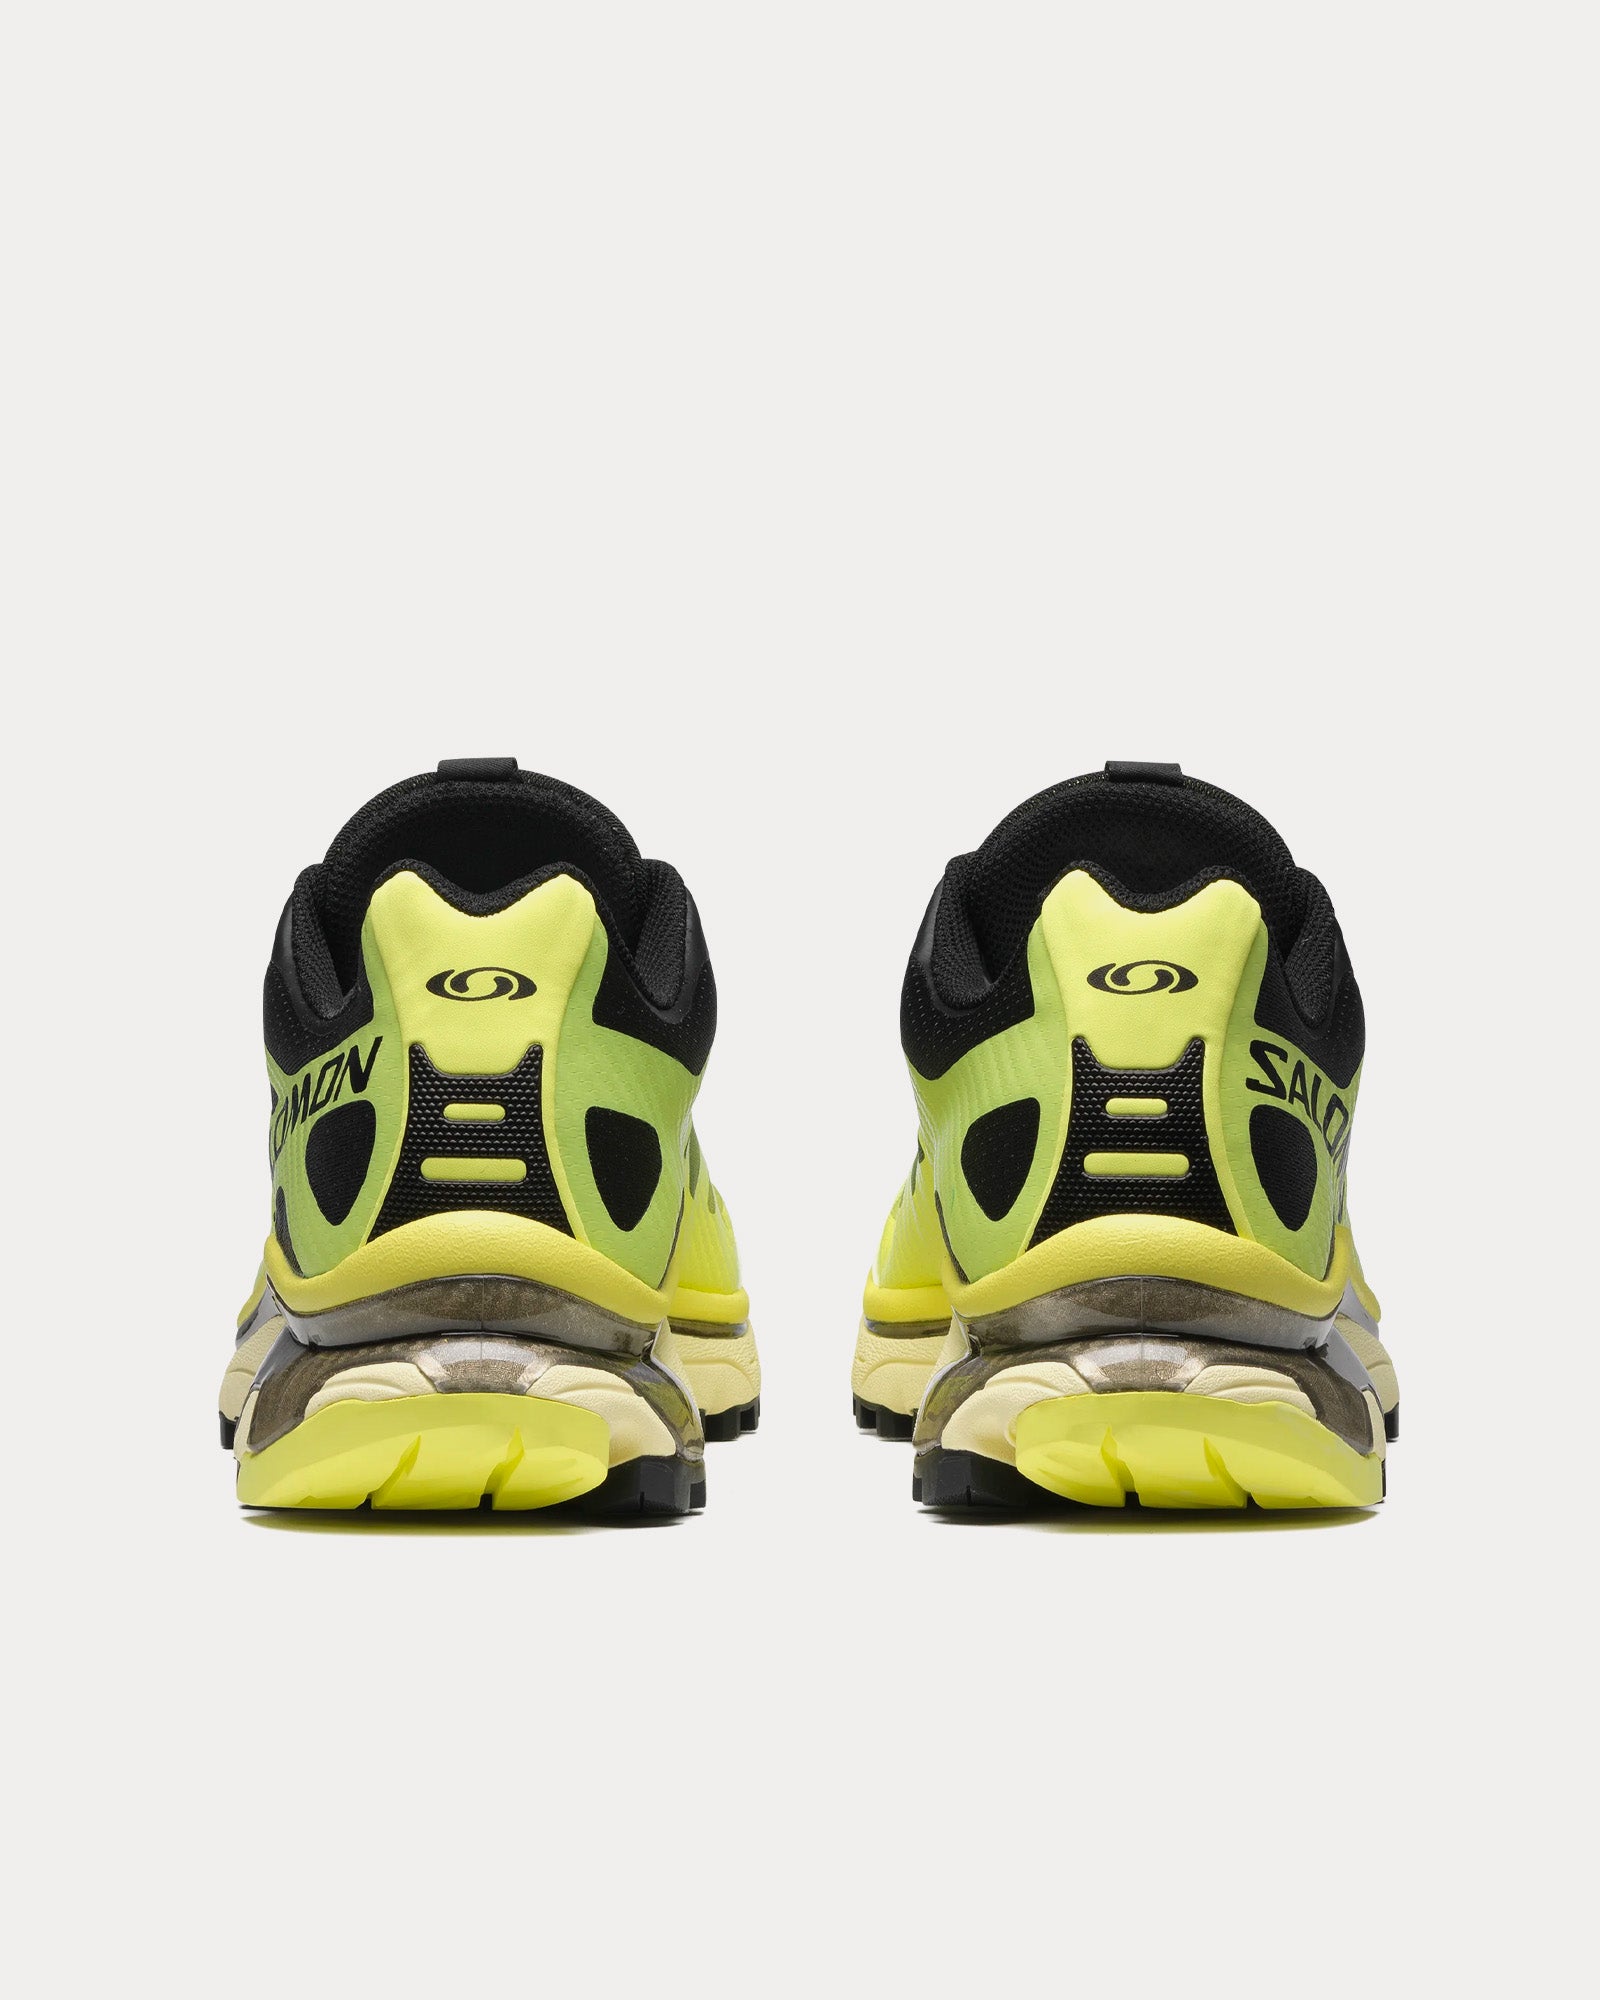 Salomon - XT-4 OG Sunny Lime / Black / Transparent Yellow Low Top Sneakers